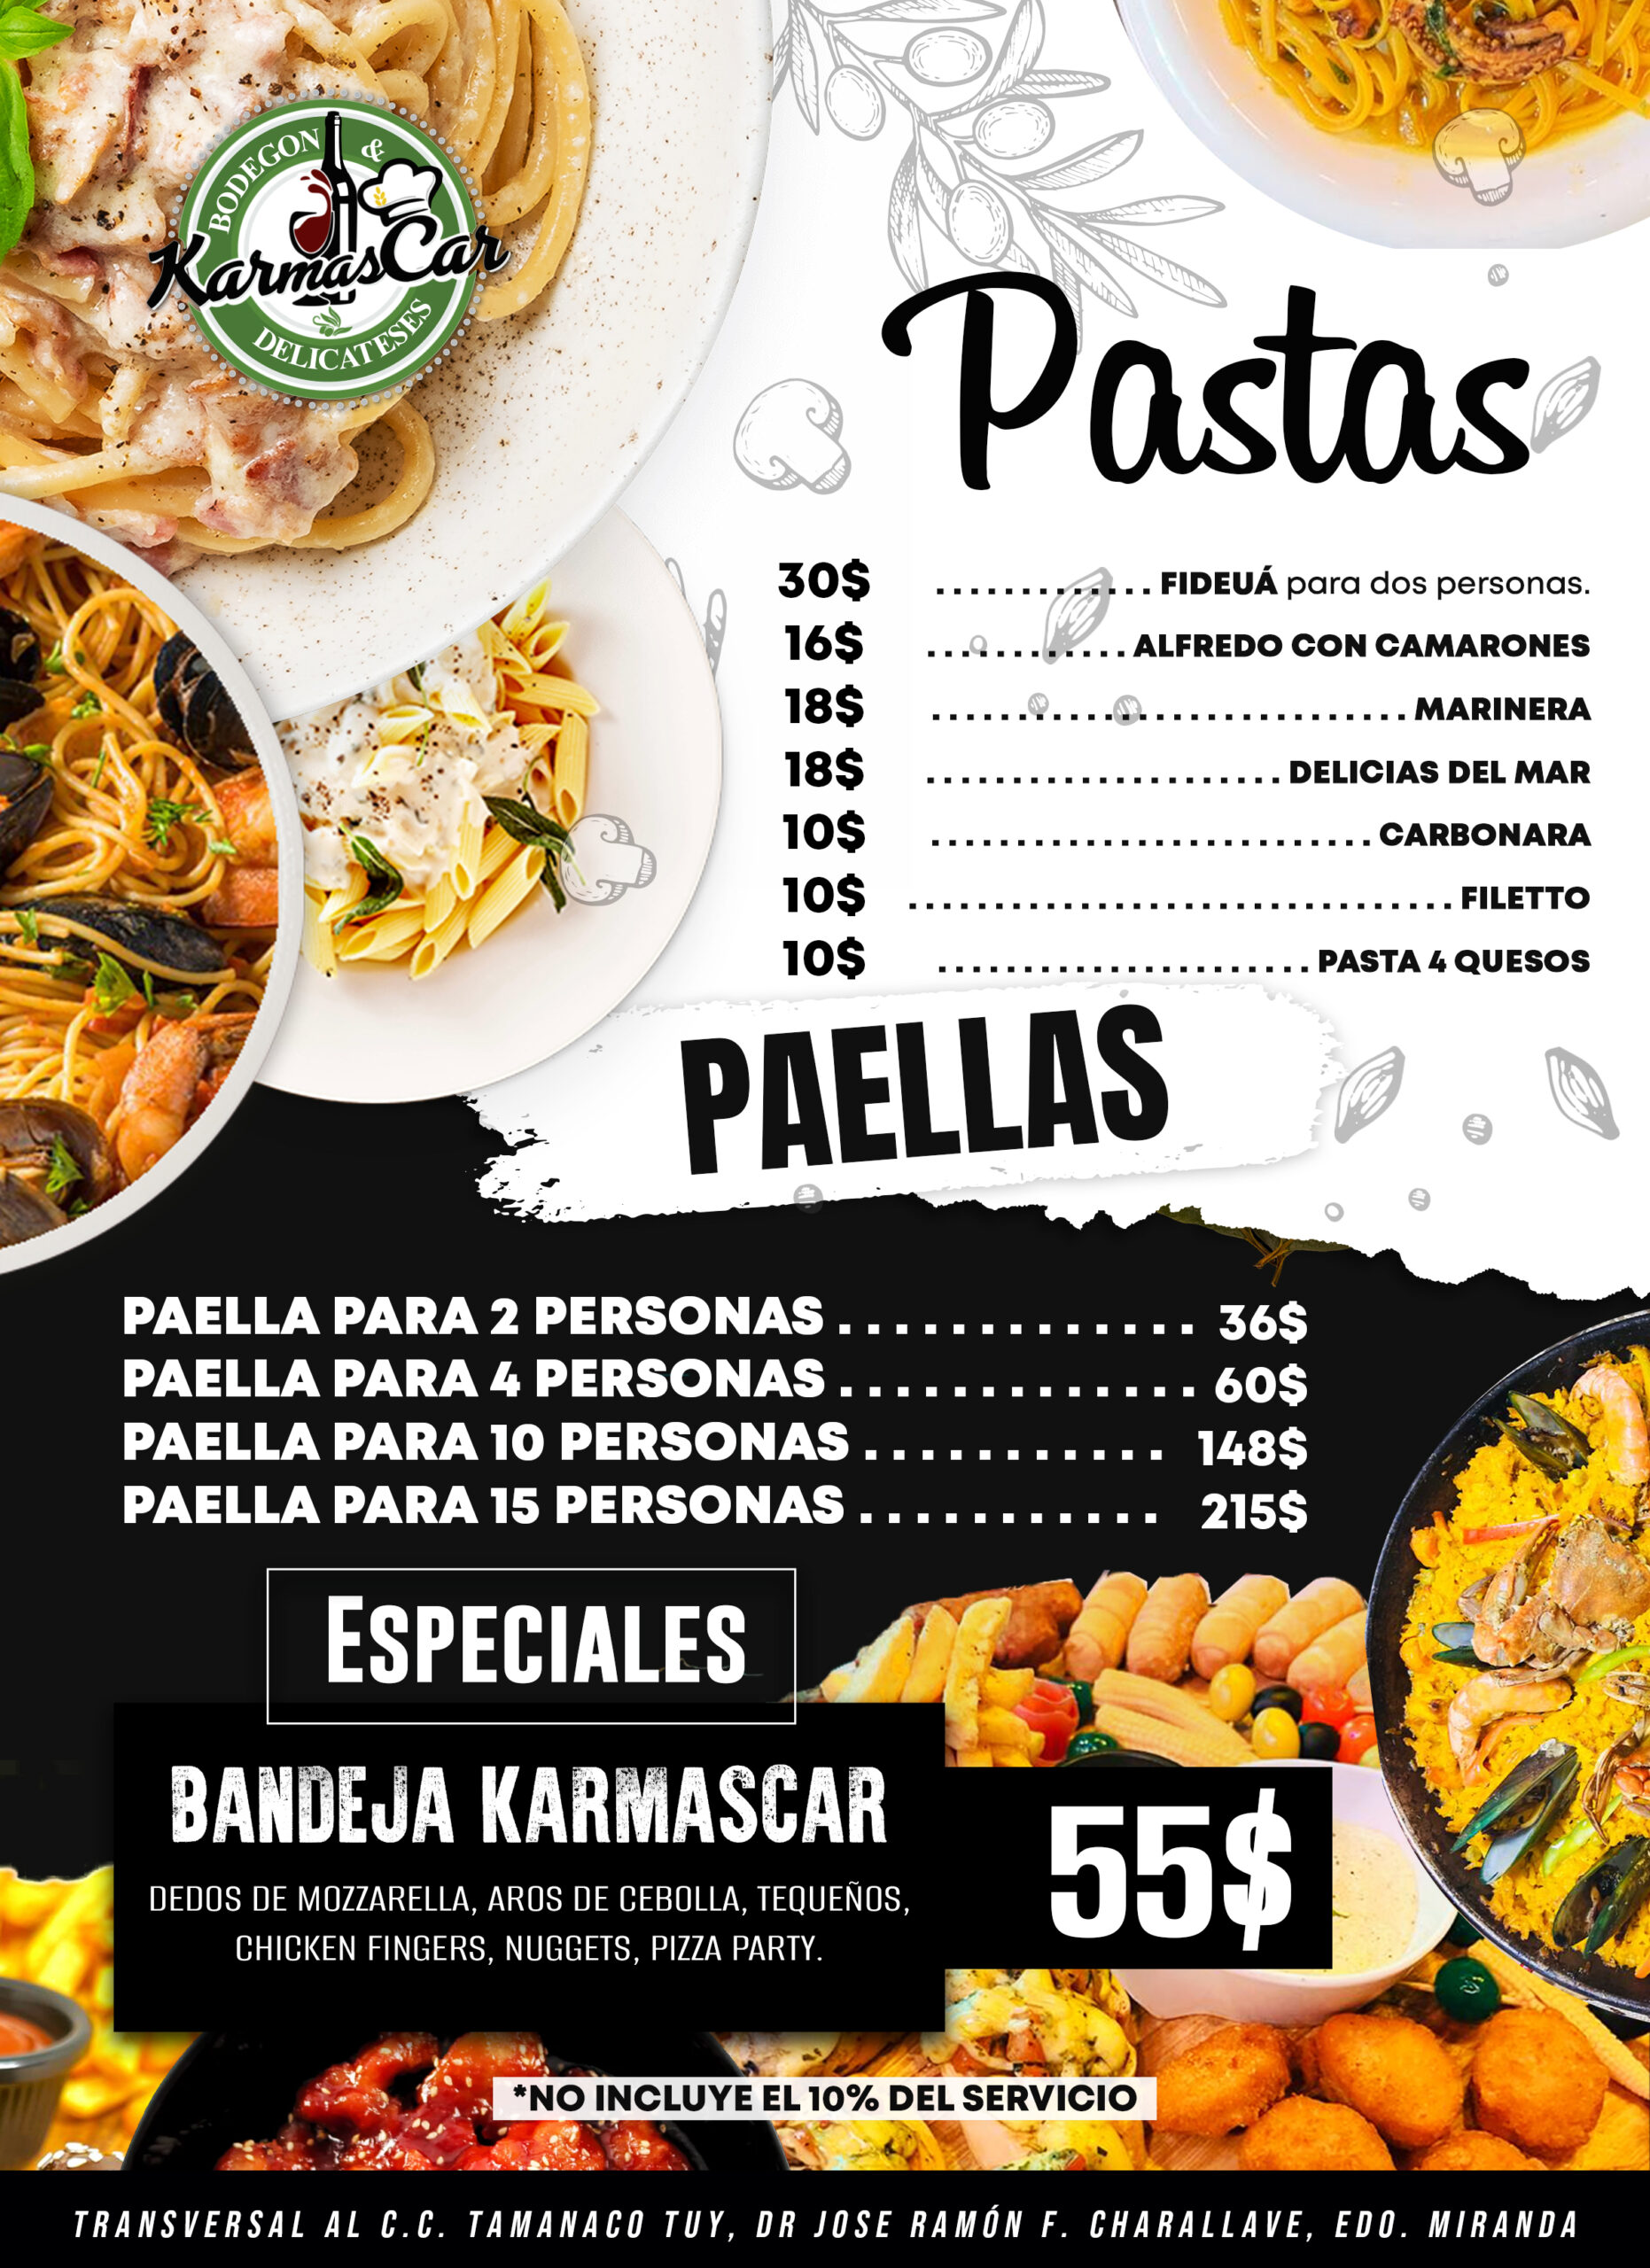 menu_nuevo4x4Pastas